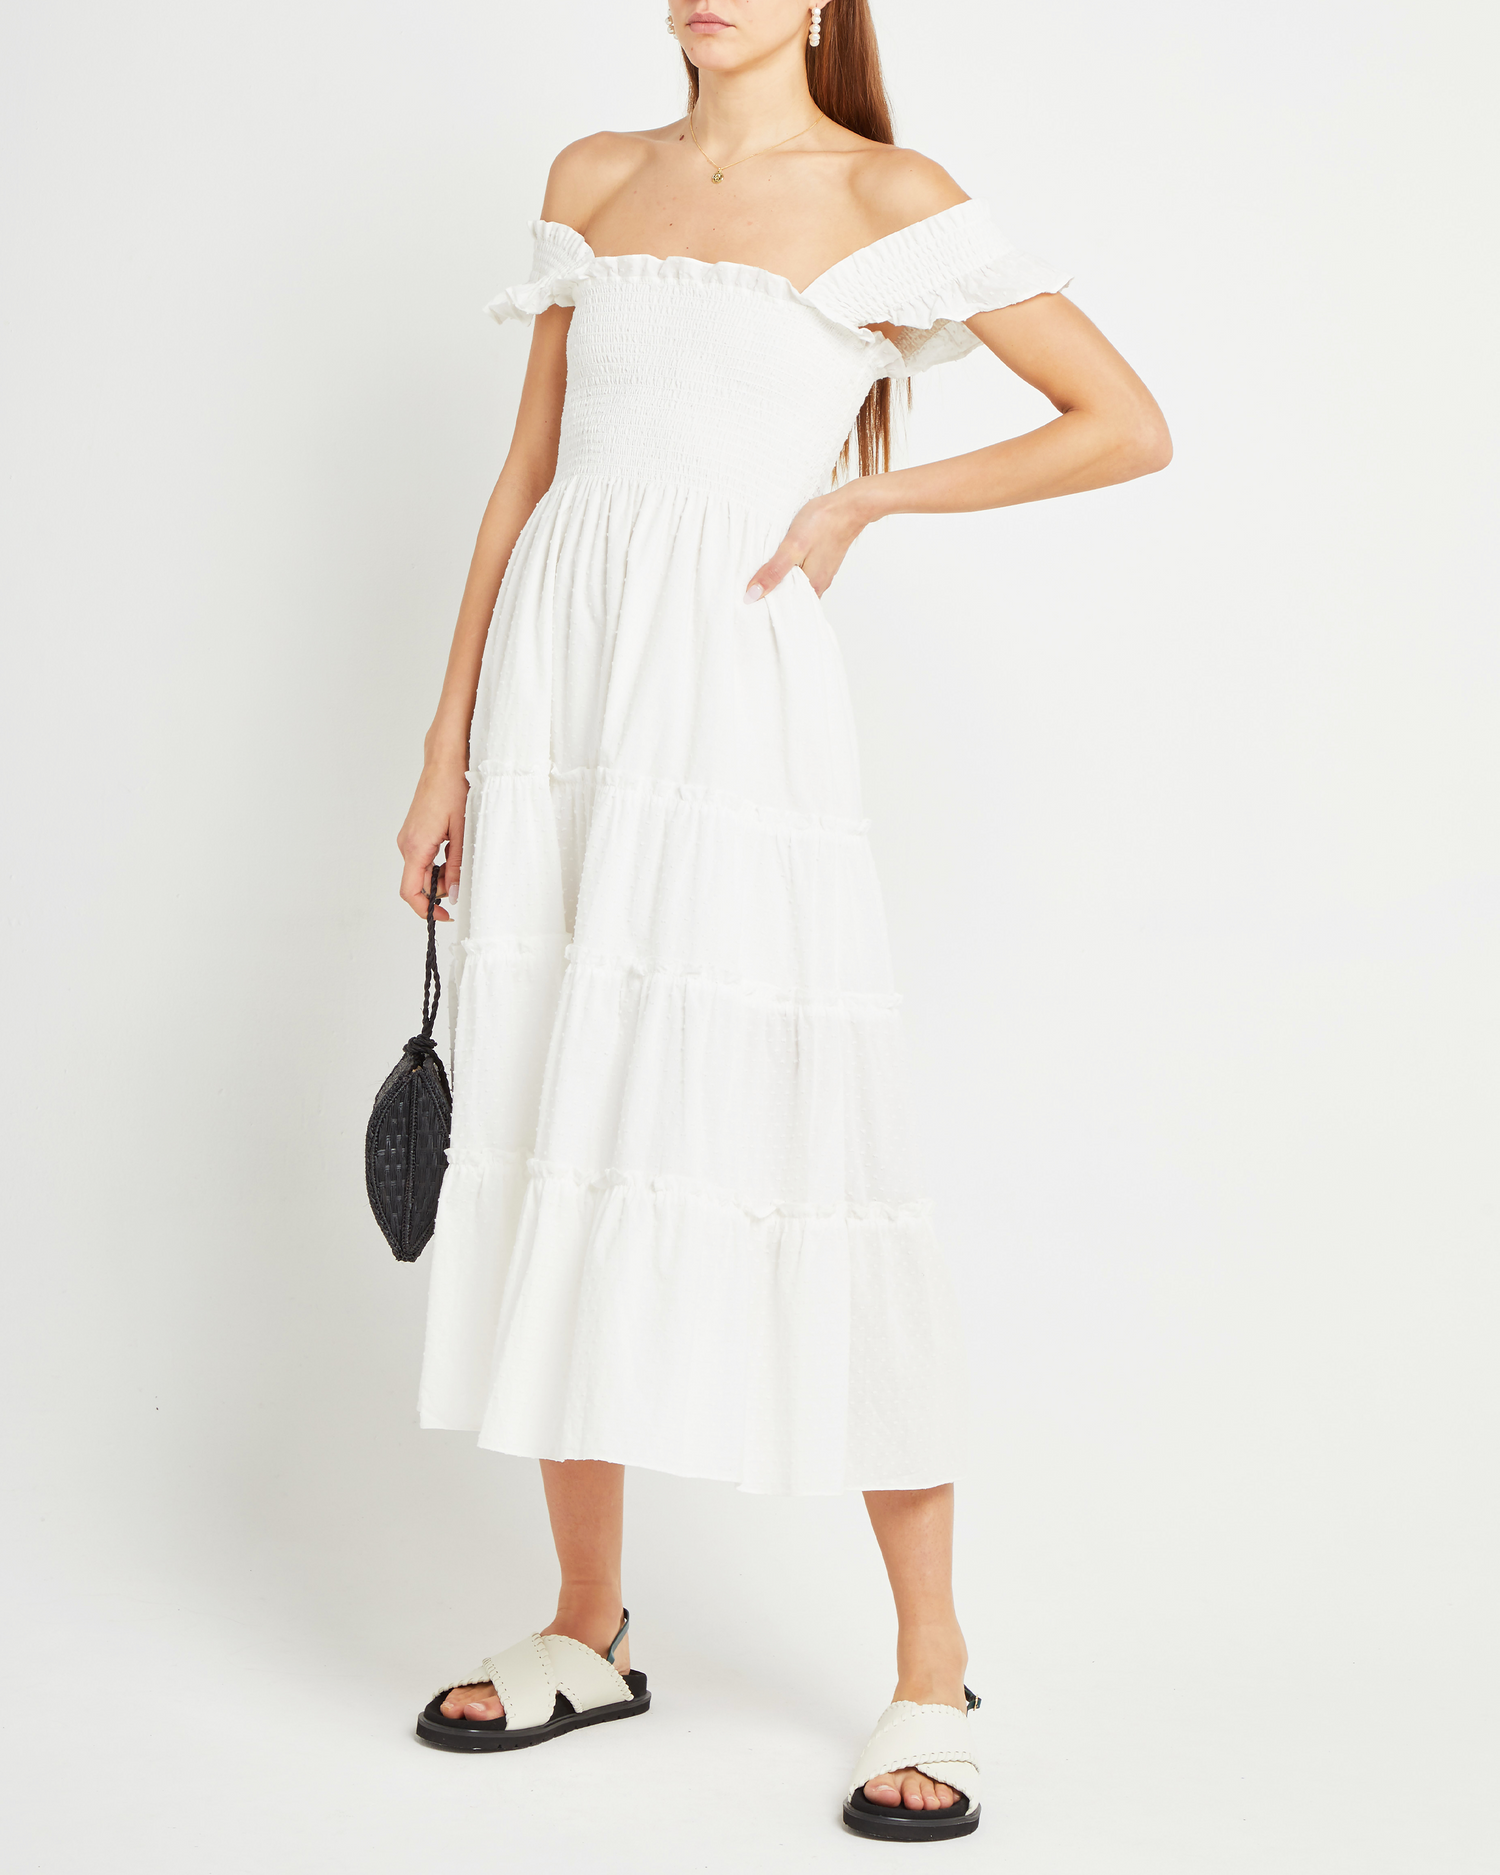 Fourth image of Calypso Maxi Dress, a white maxi dress, swiss dot material, smocked bodice, ruffles cap sleeves 